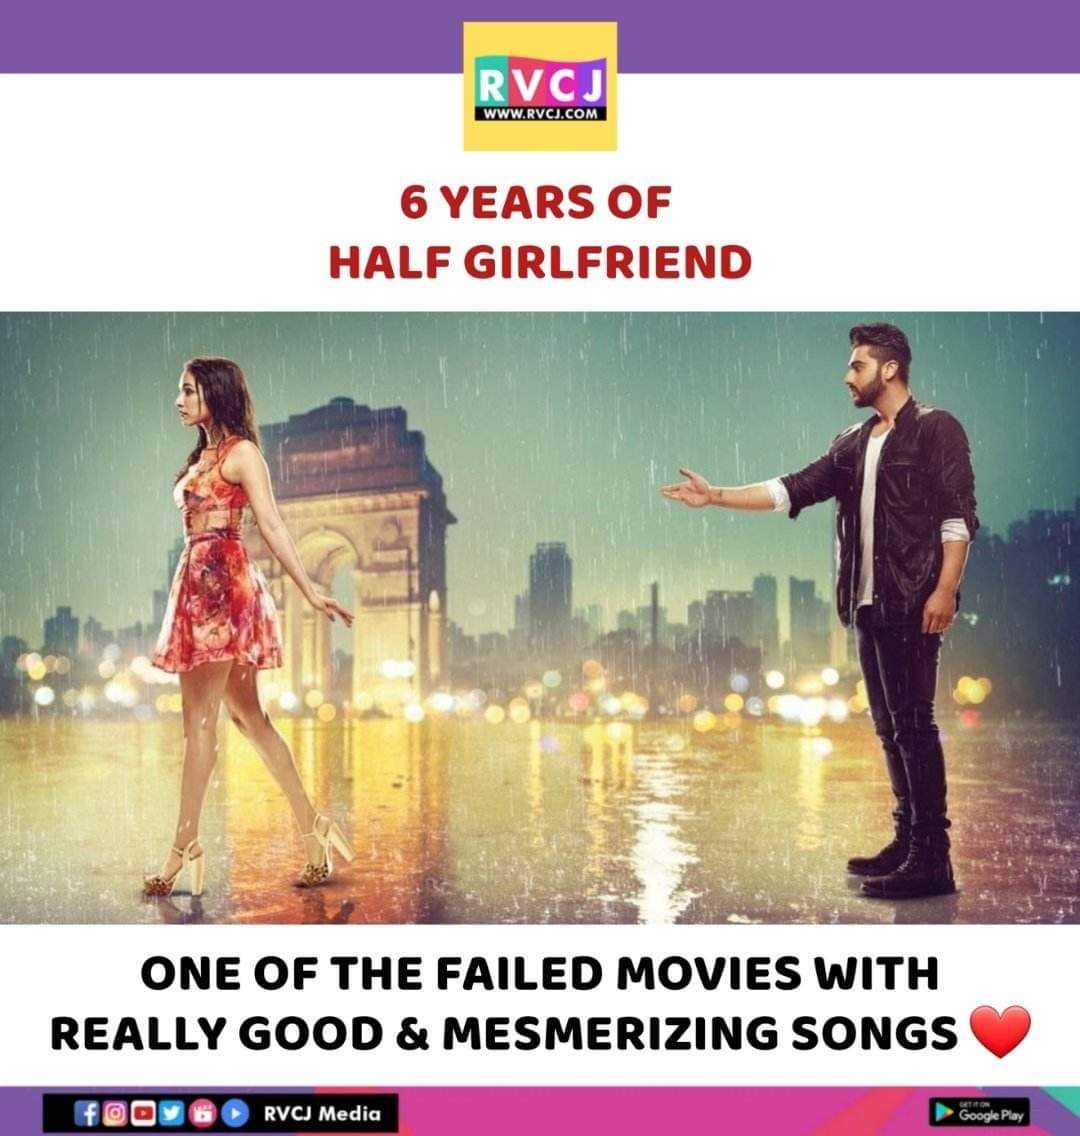 6 years of Half Girlfriend!
#halfgirlfriend #arjunkapoor #shraddhakapoor #mohitsuri #bollywood #rvcjmovies